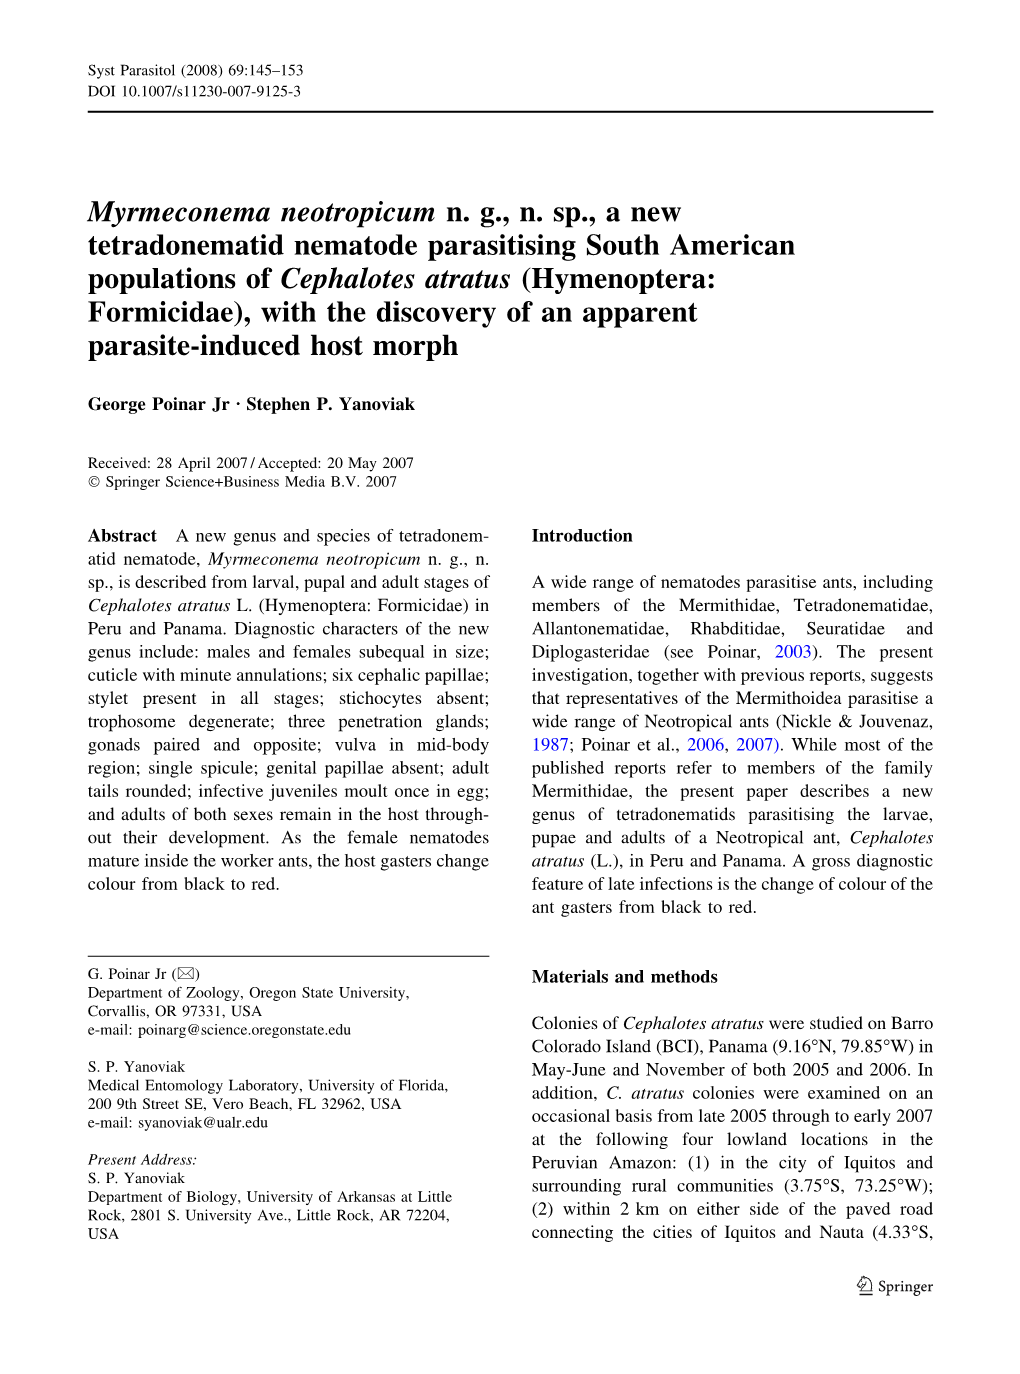 Myrmeconema Neotropicum N. G., N. Sp., a New Tetradonematid